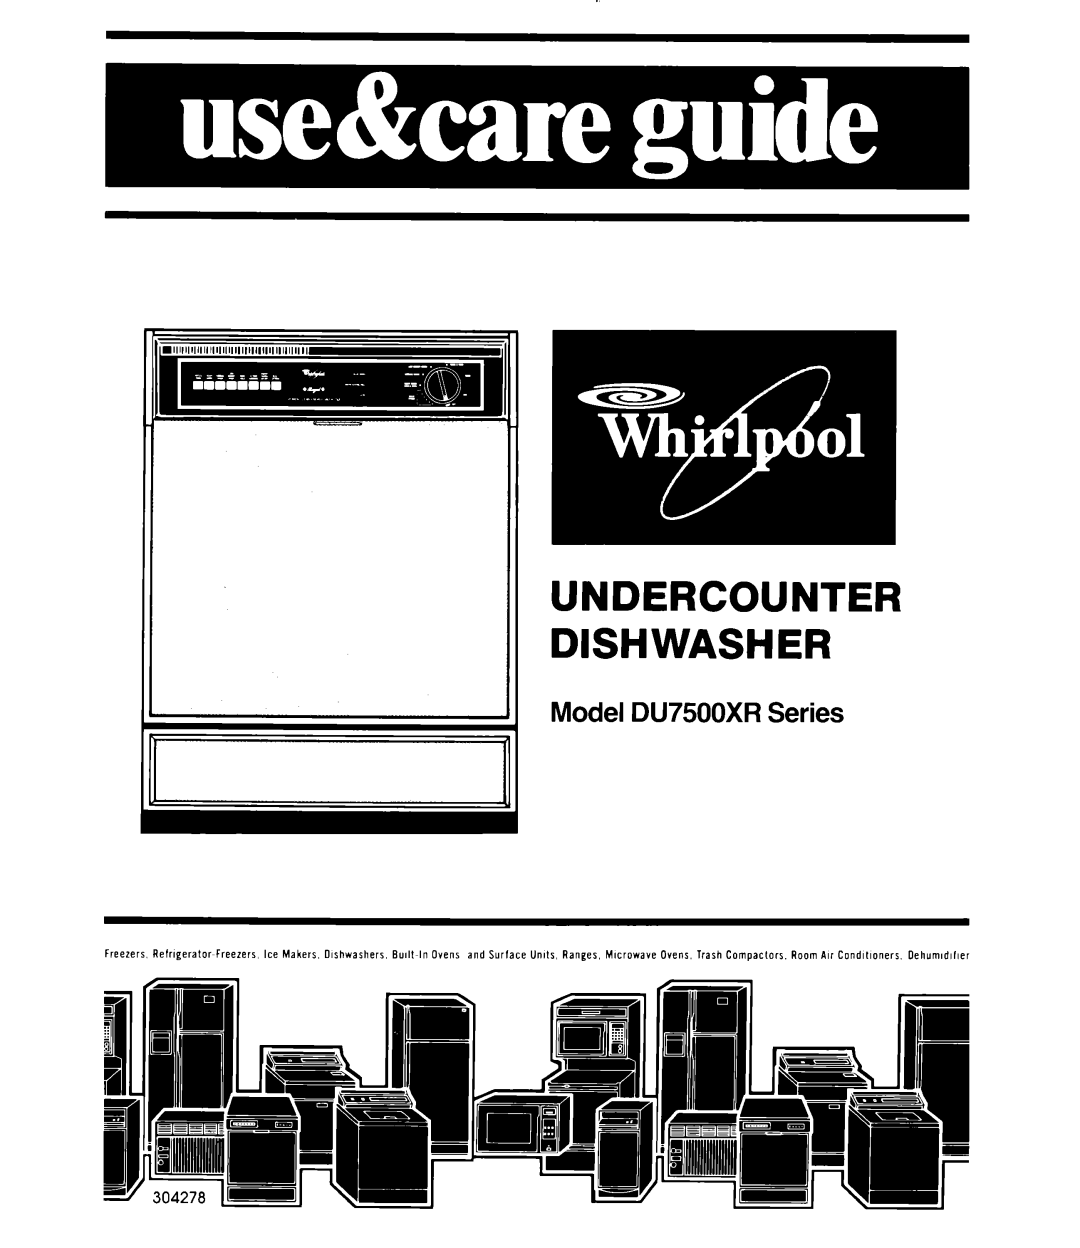 Whirlpool manual Model DU7500XR Series, Undercounter Dishwasher 